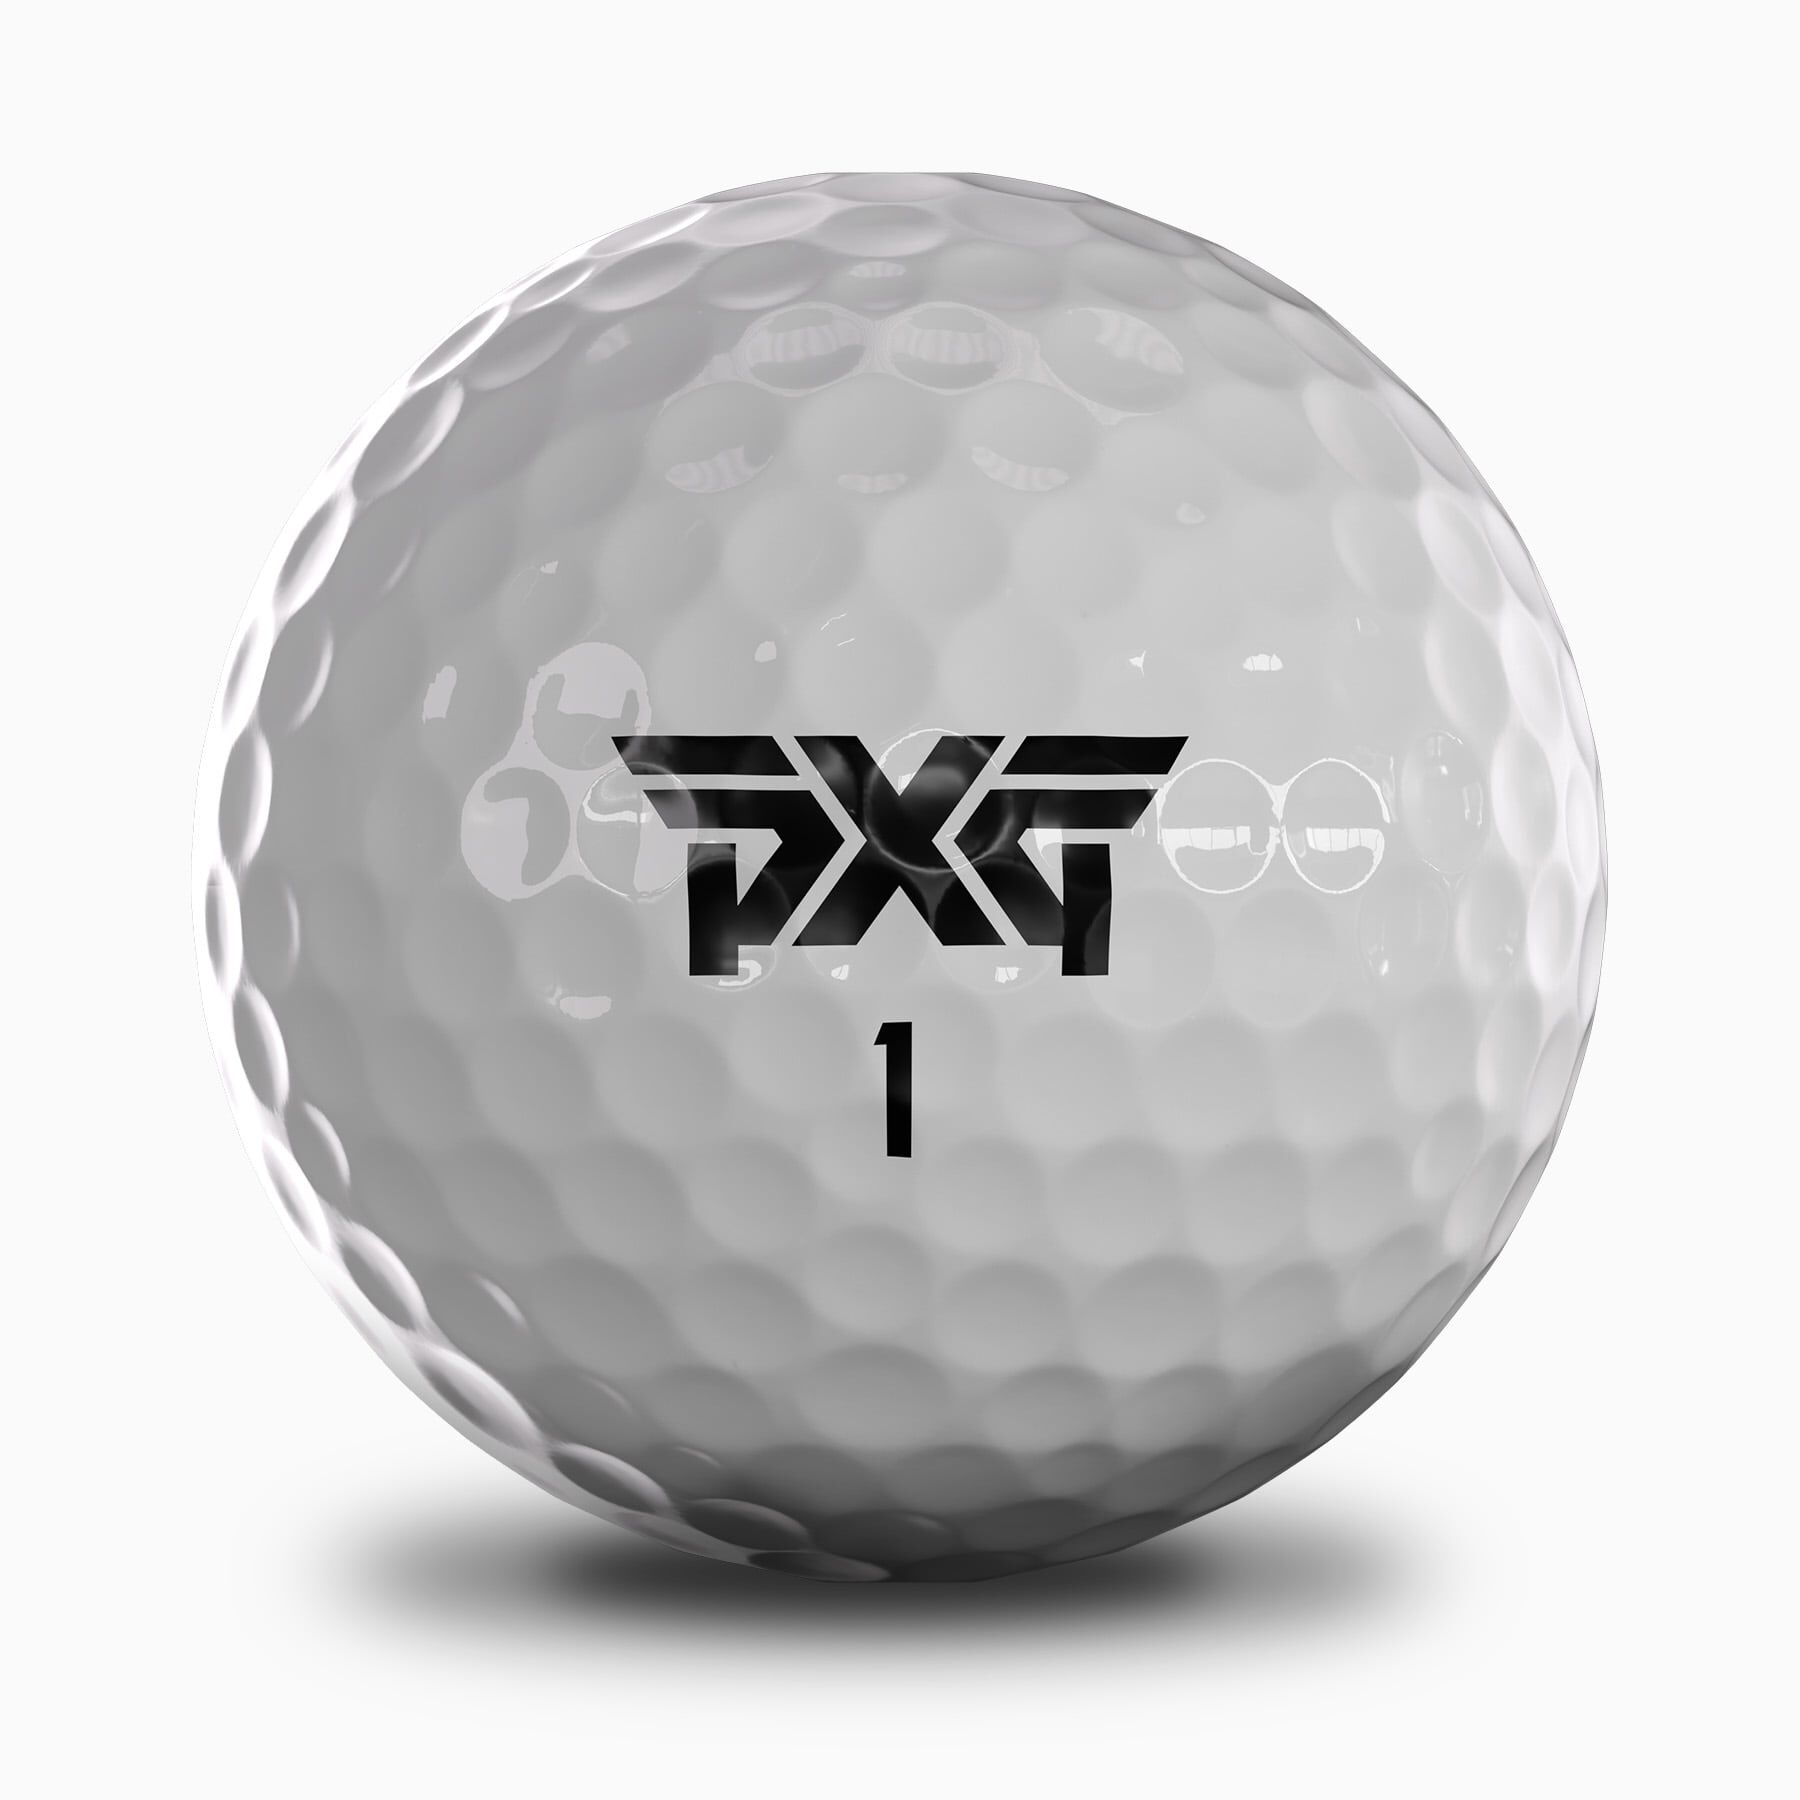 NEW PXG Xtreme Premium Golf Balls